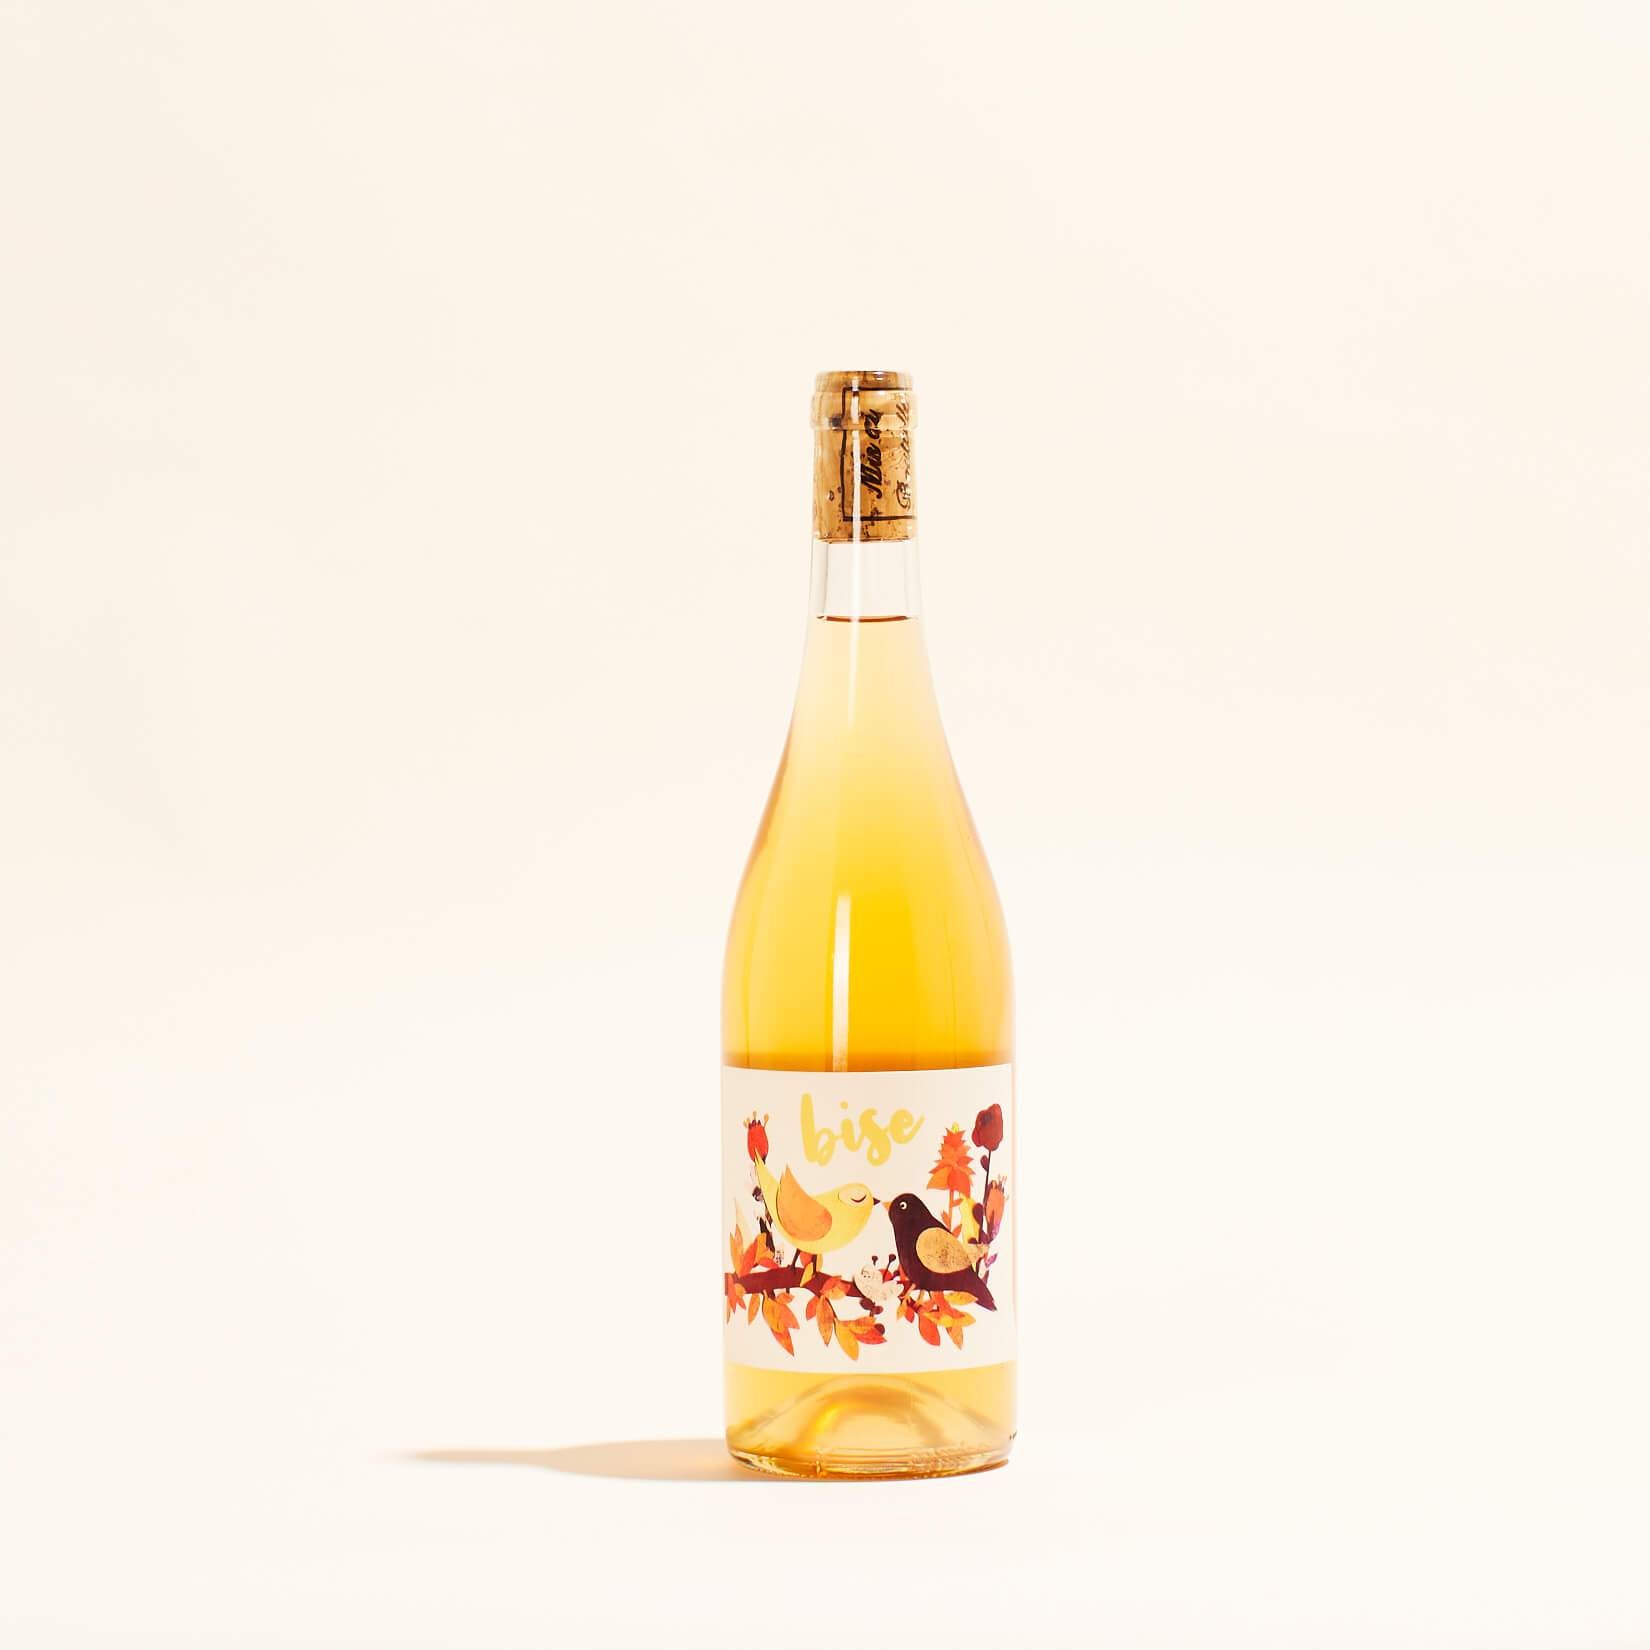 la bise chateau le payral natural Orange wine Bergerac France front label